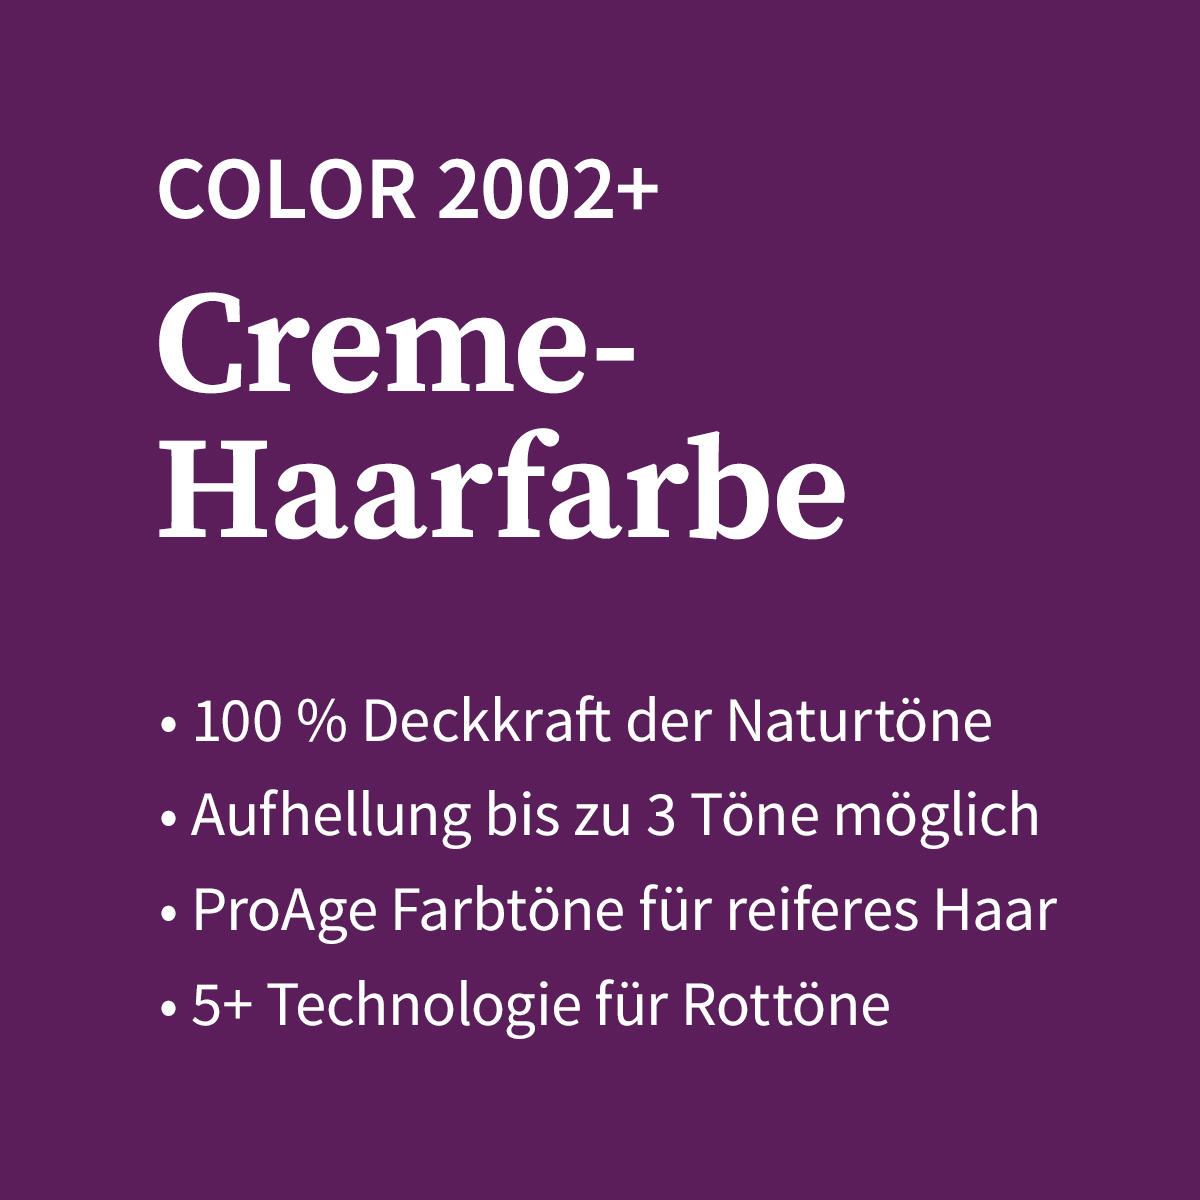 Basler Color 2002+ Cremehaarfarbe 7/4 mittelblond rot, Tube 60 ml - 4